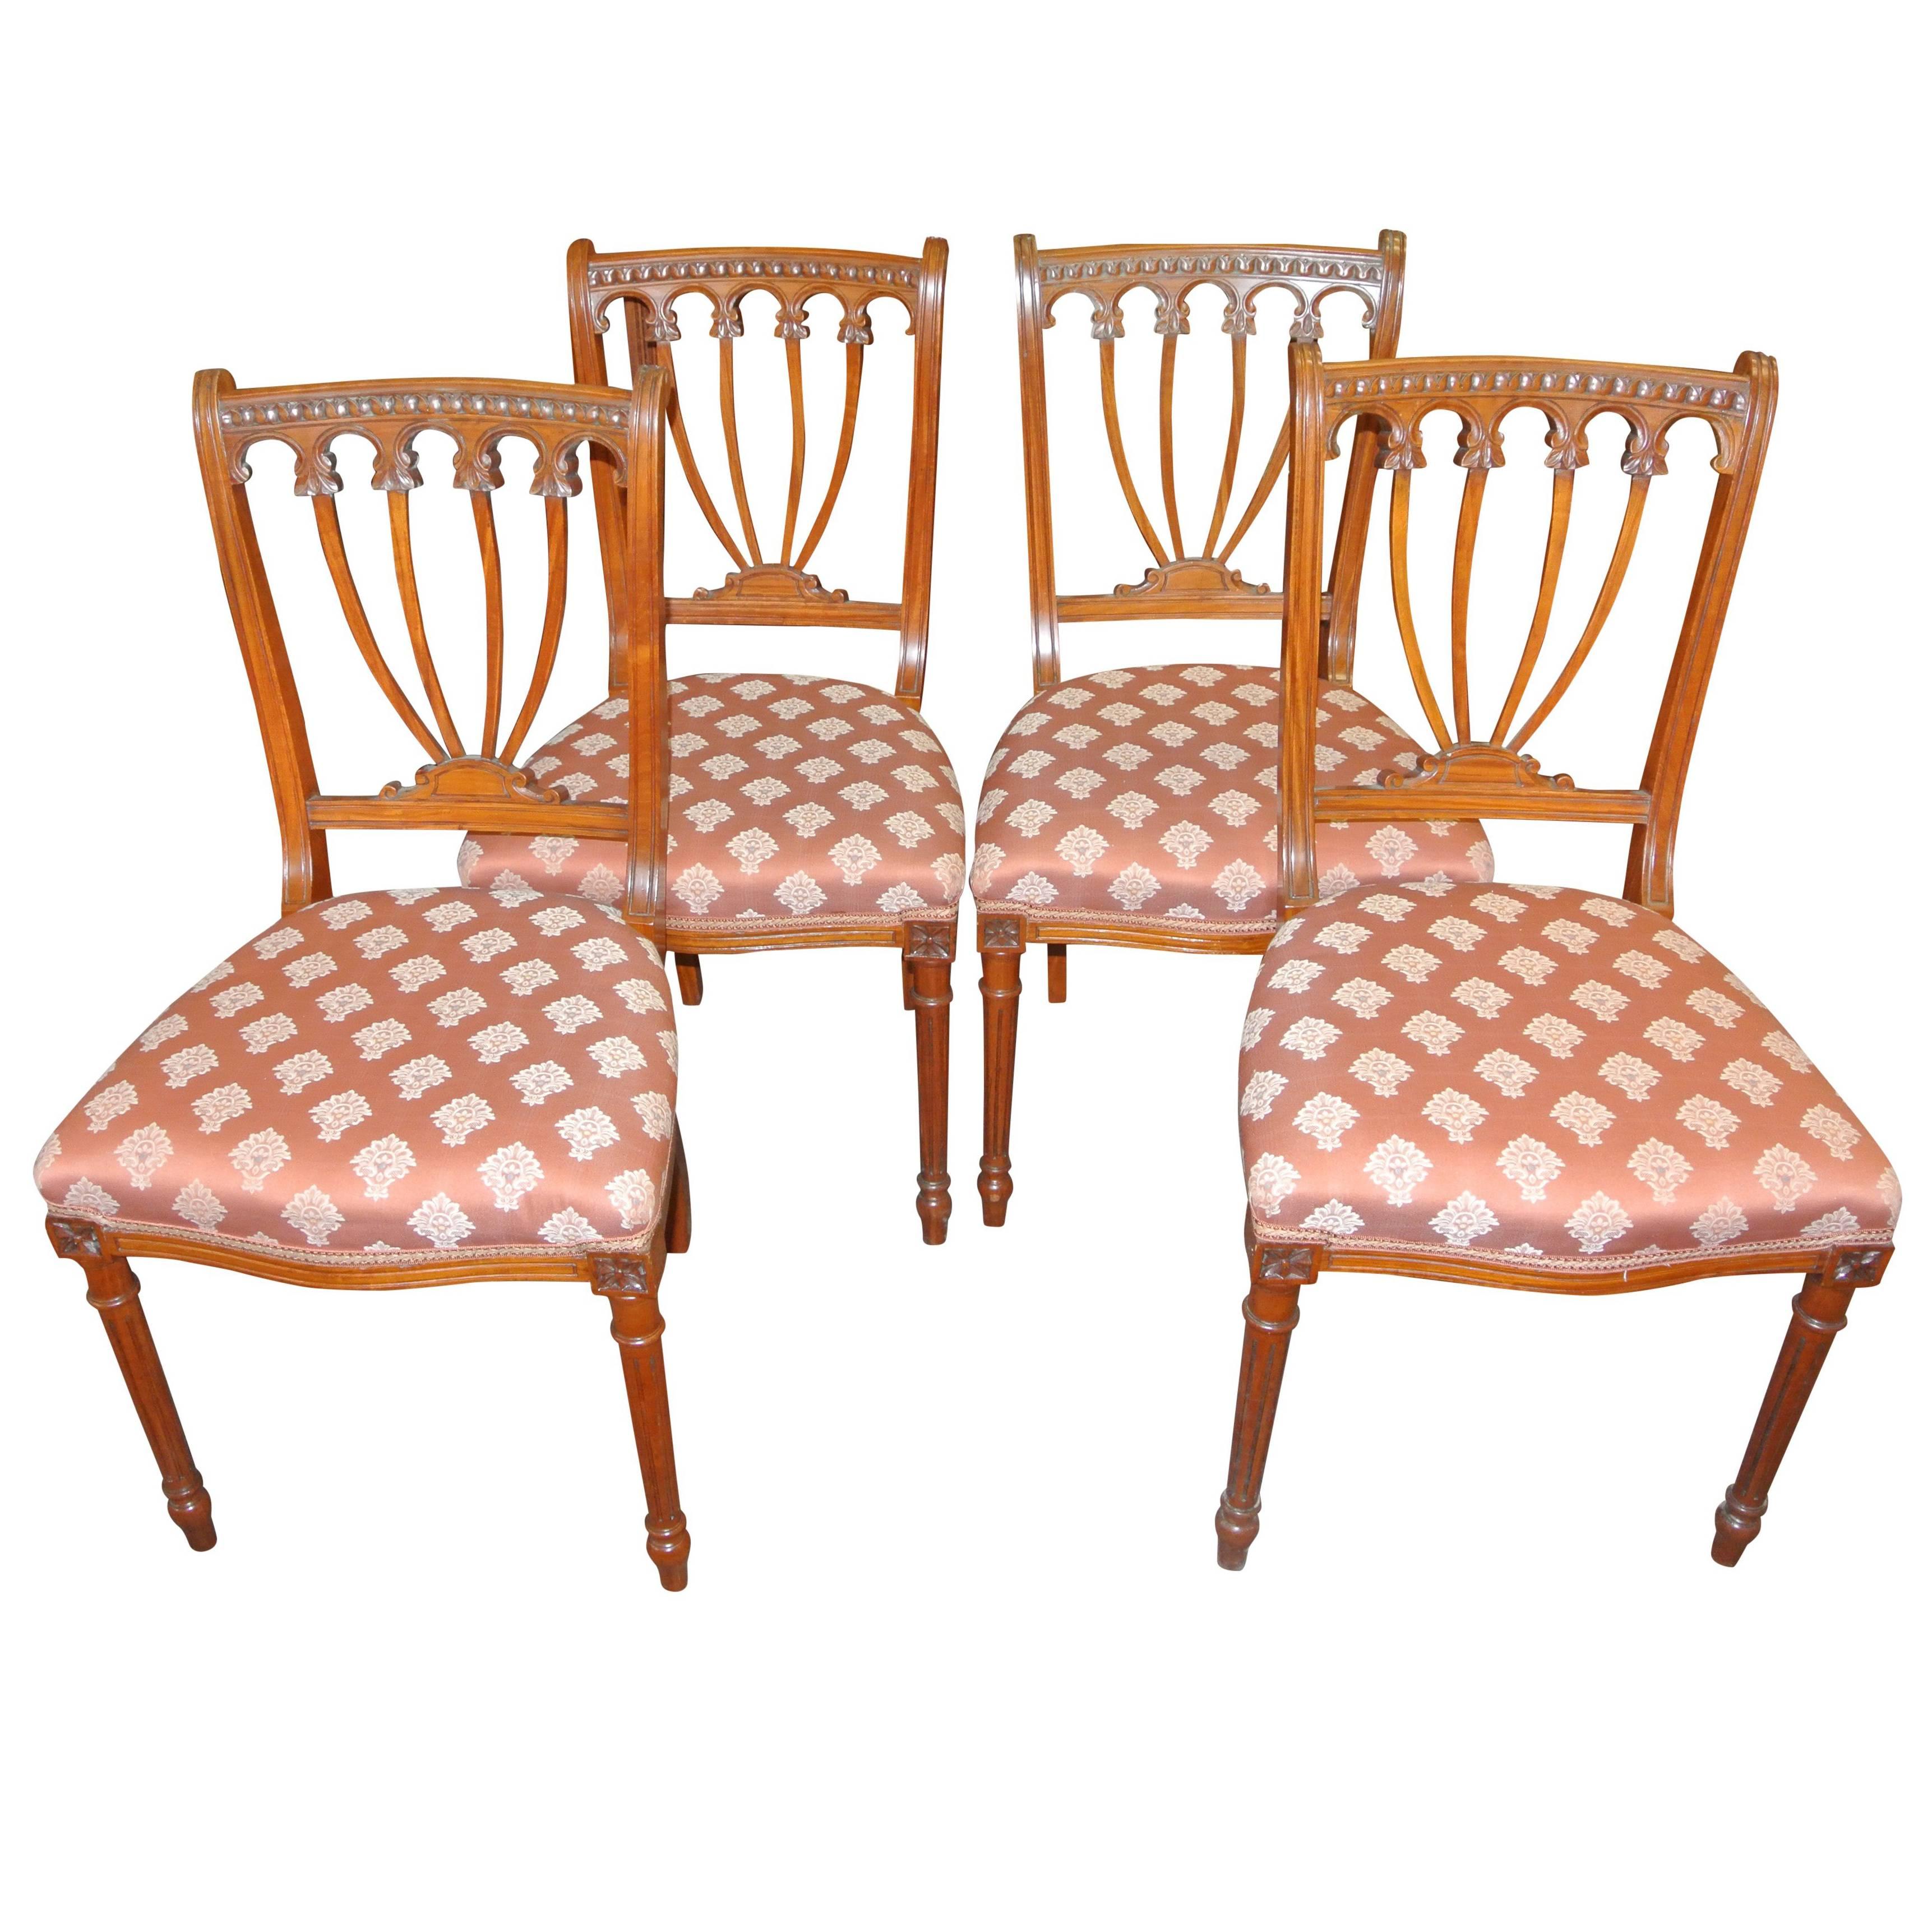 Four 19th Century Hepplewhite Satinwood Chairs